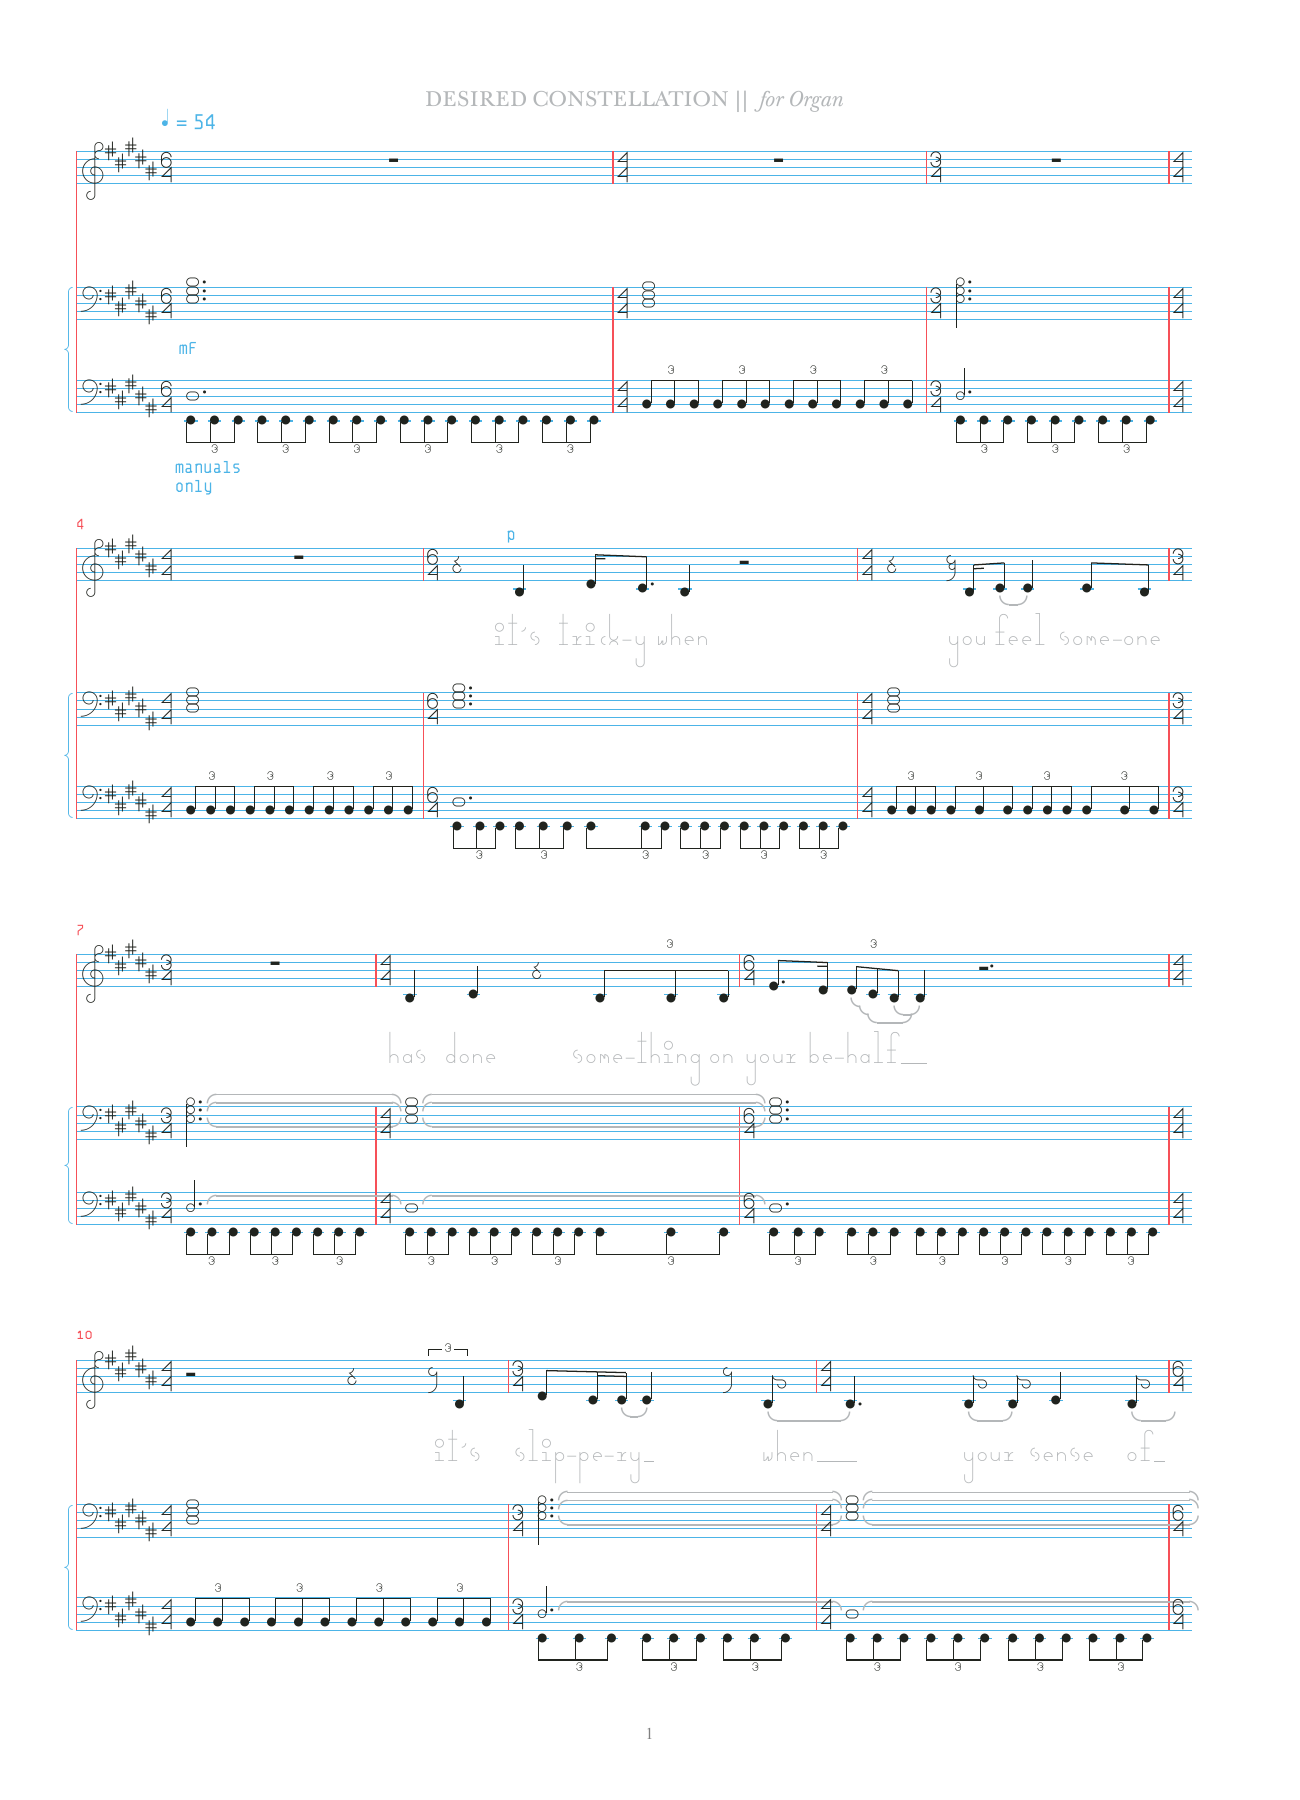 Bjork Desired Constellation Sheet Music Notes & Chords for Organ & Vocal - Download or Print PDF